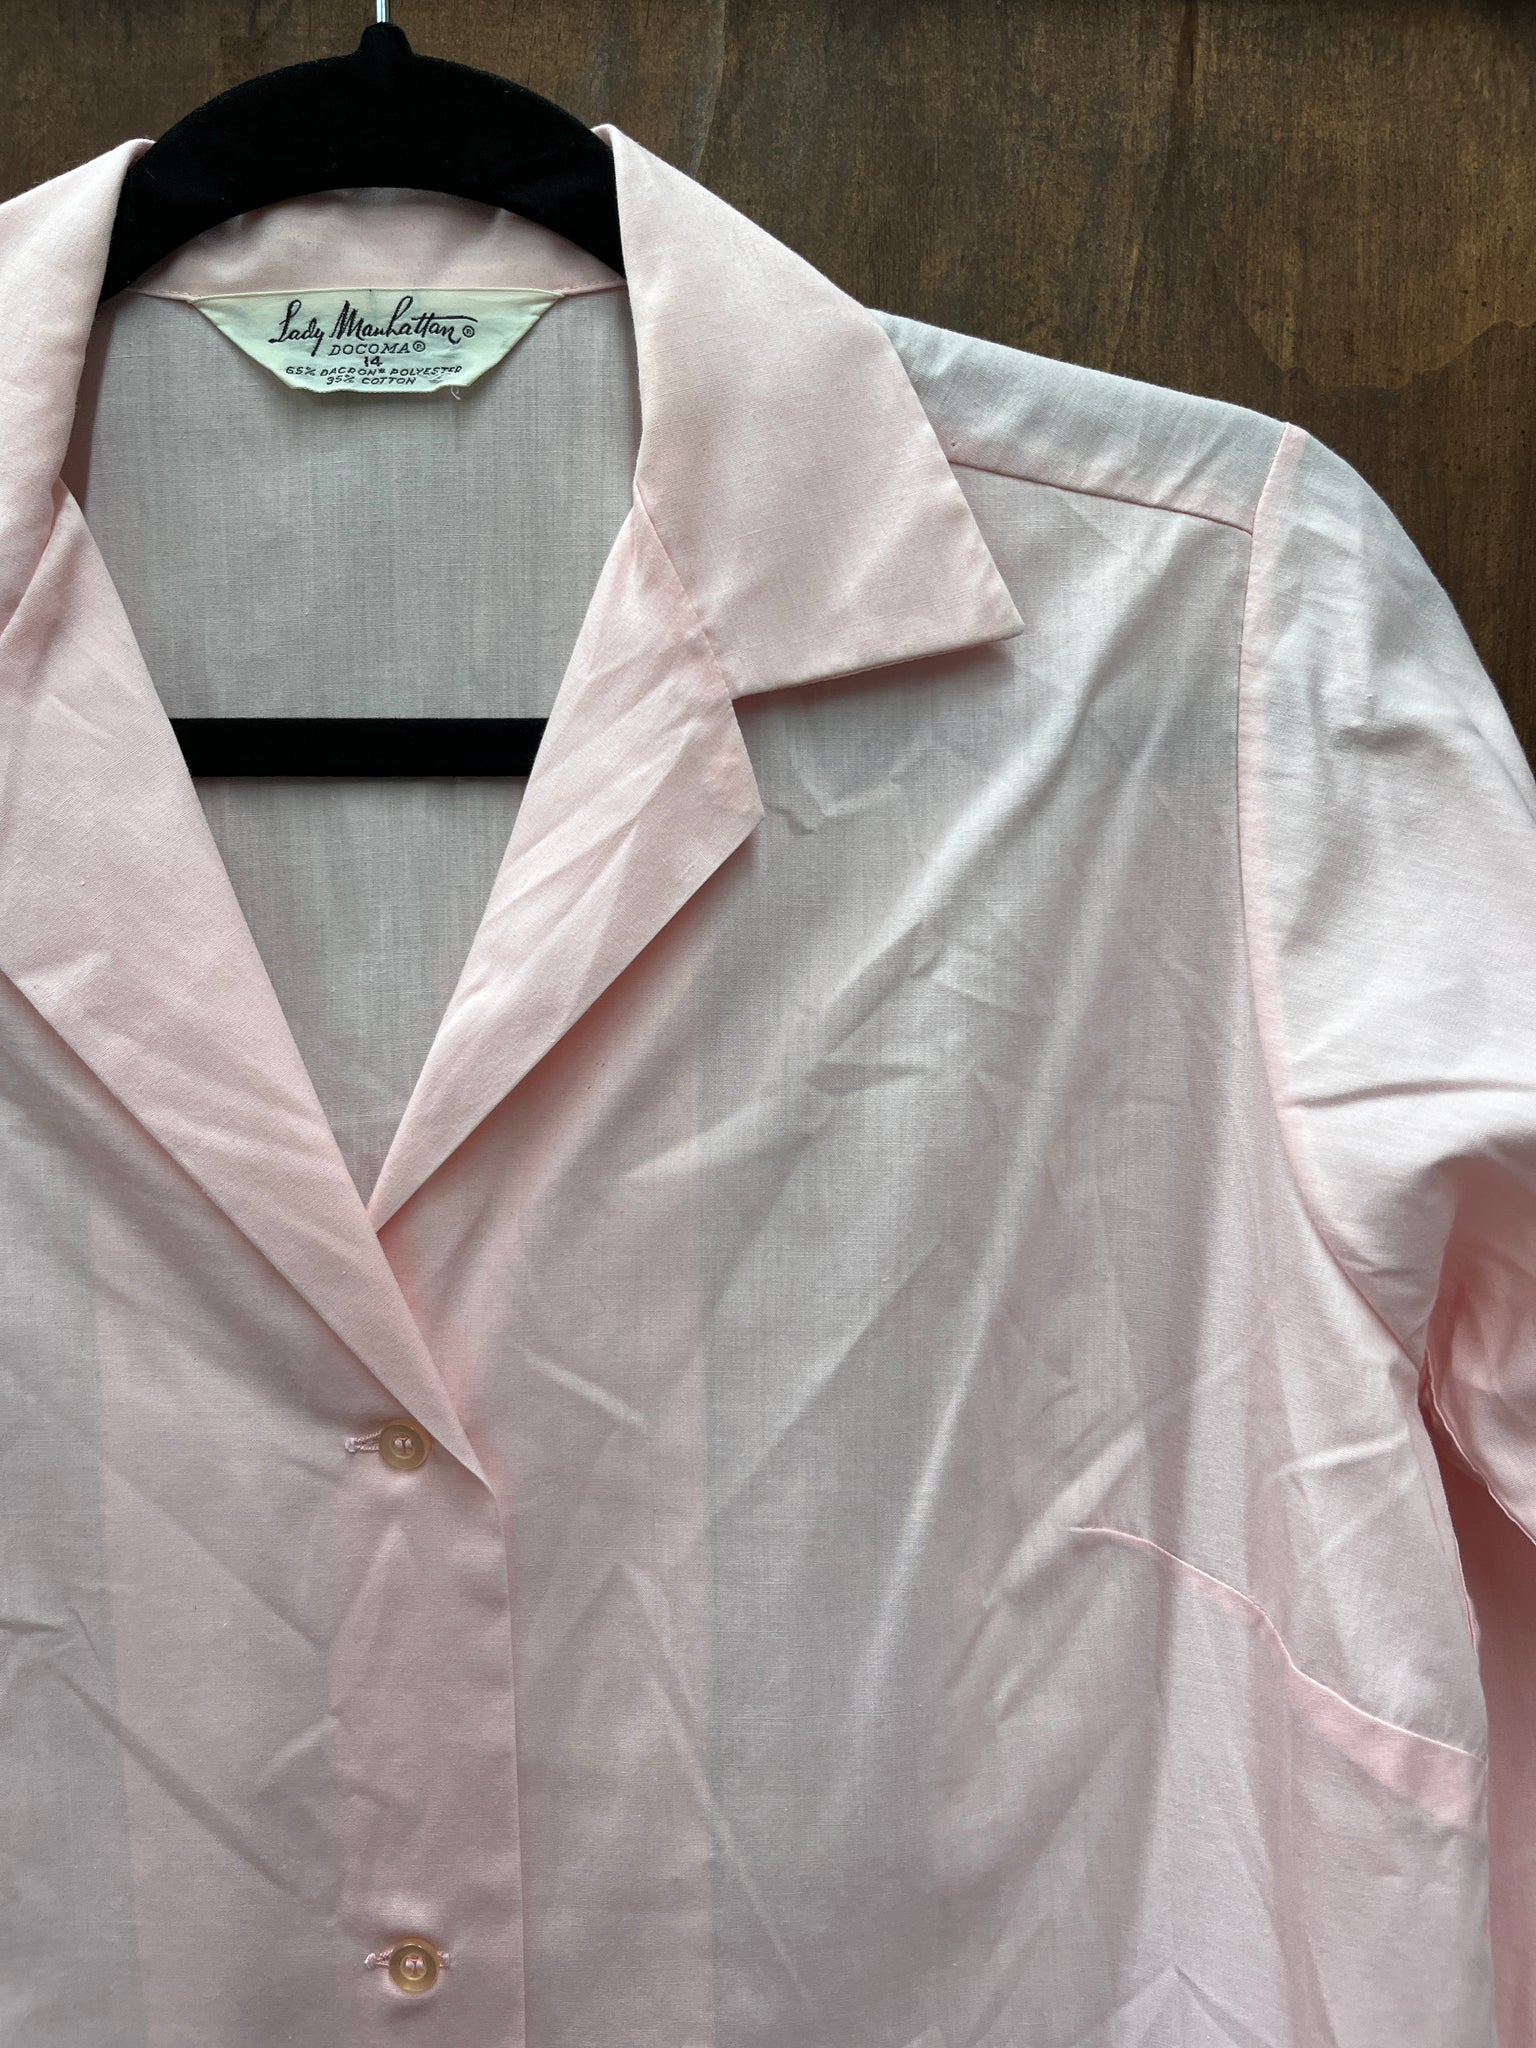 1960s TOP-Lady Manhattan-pale pink cotton button up